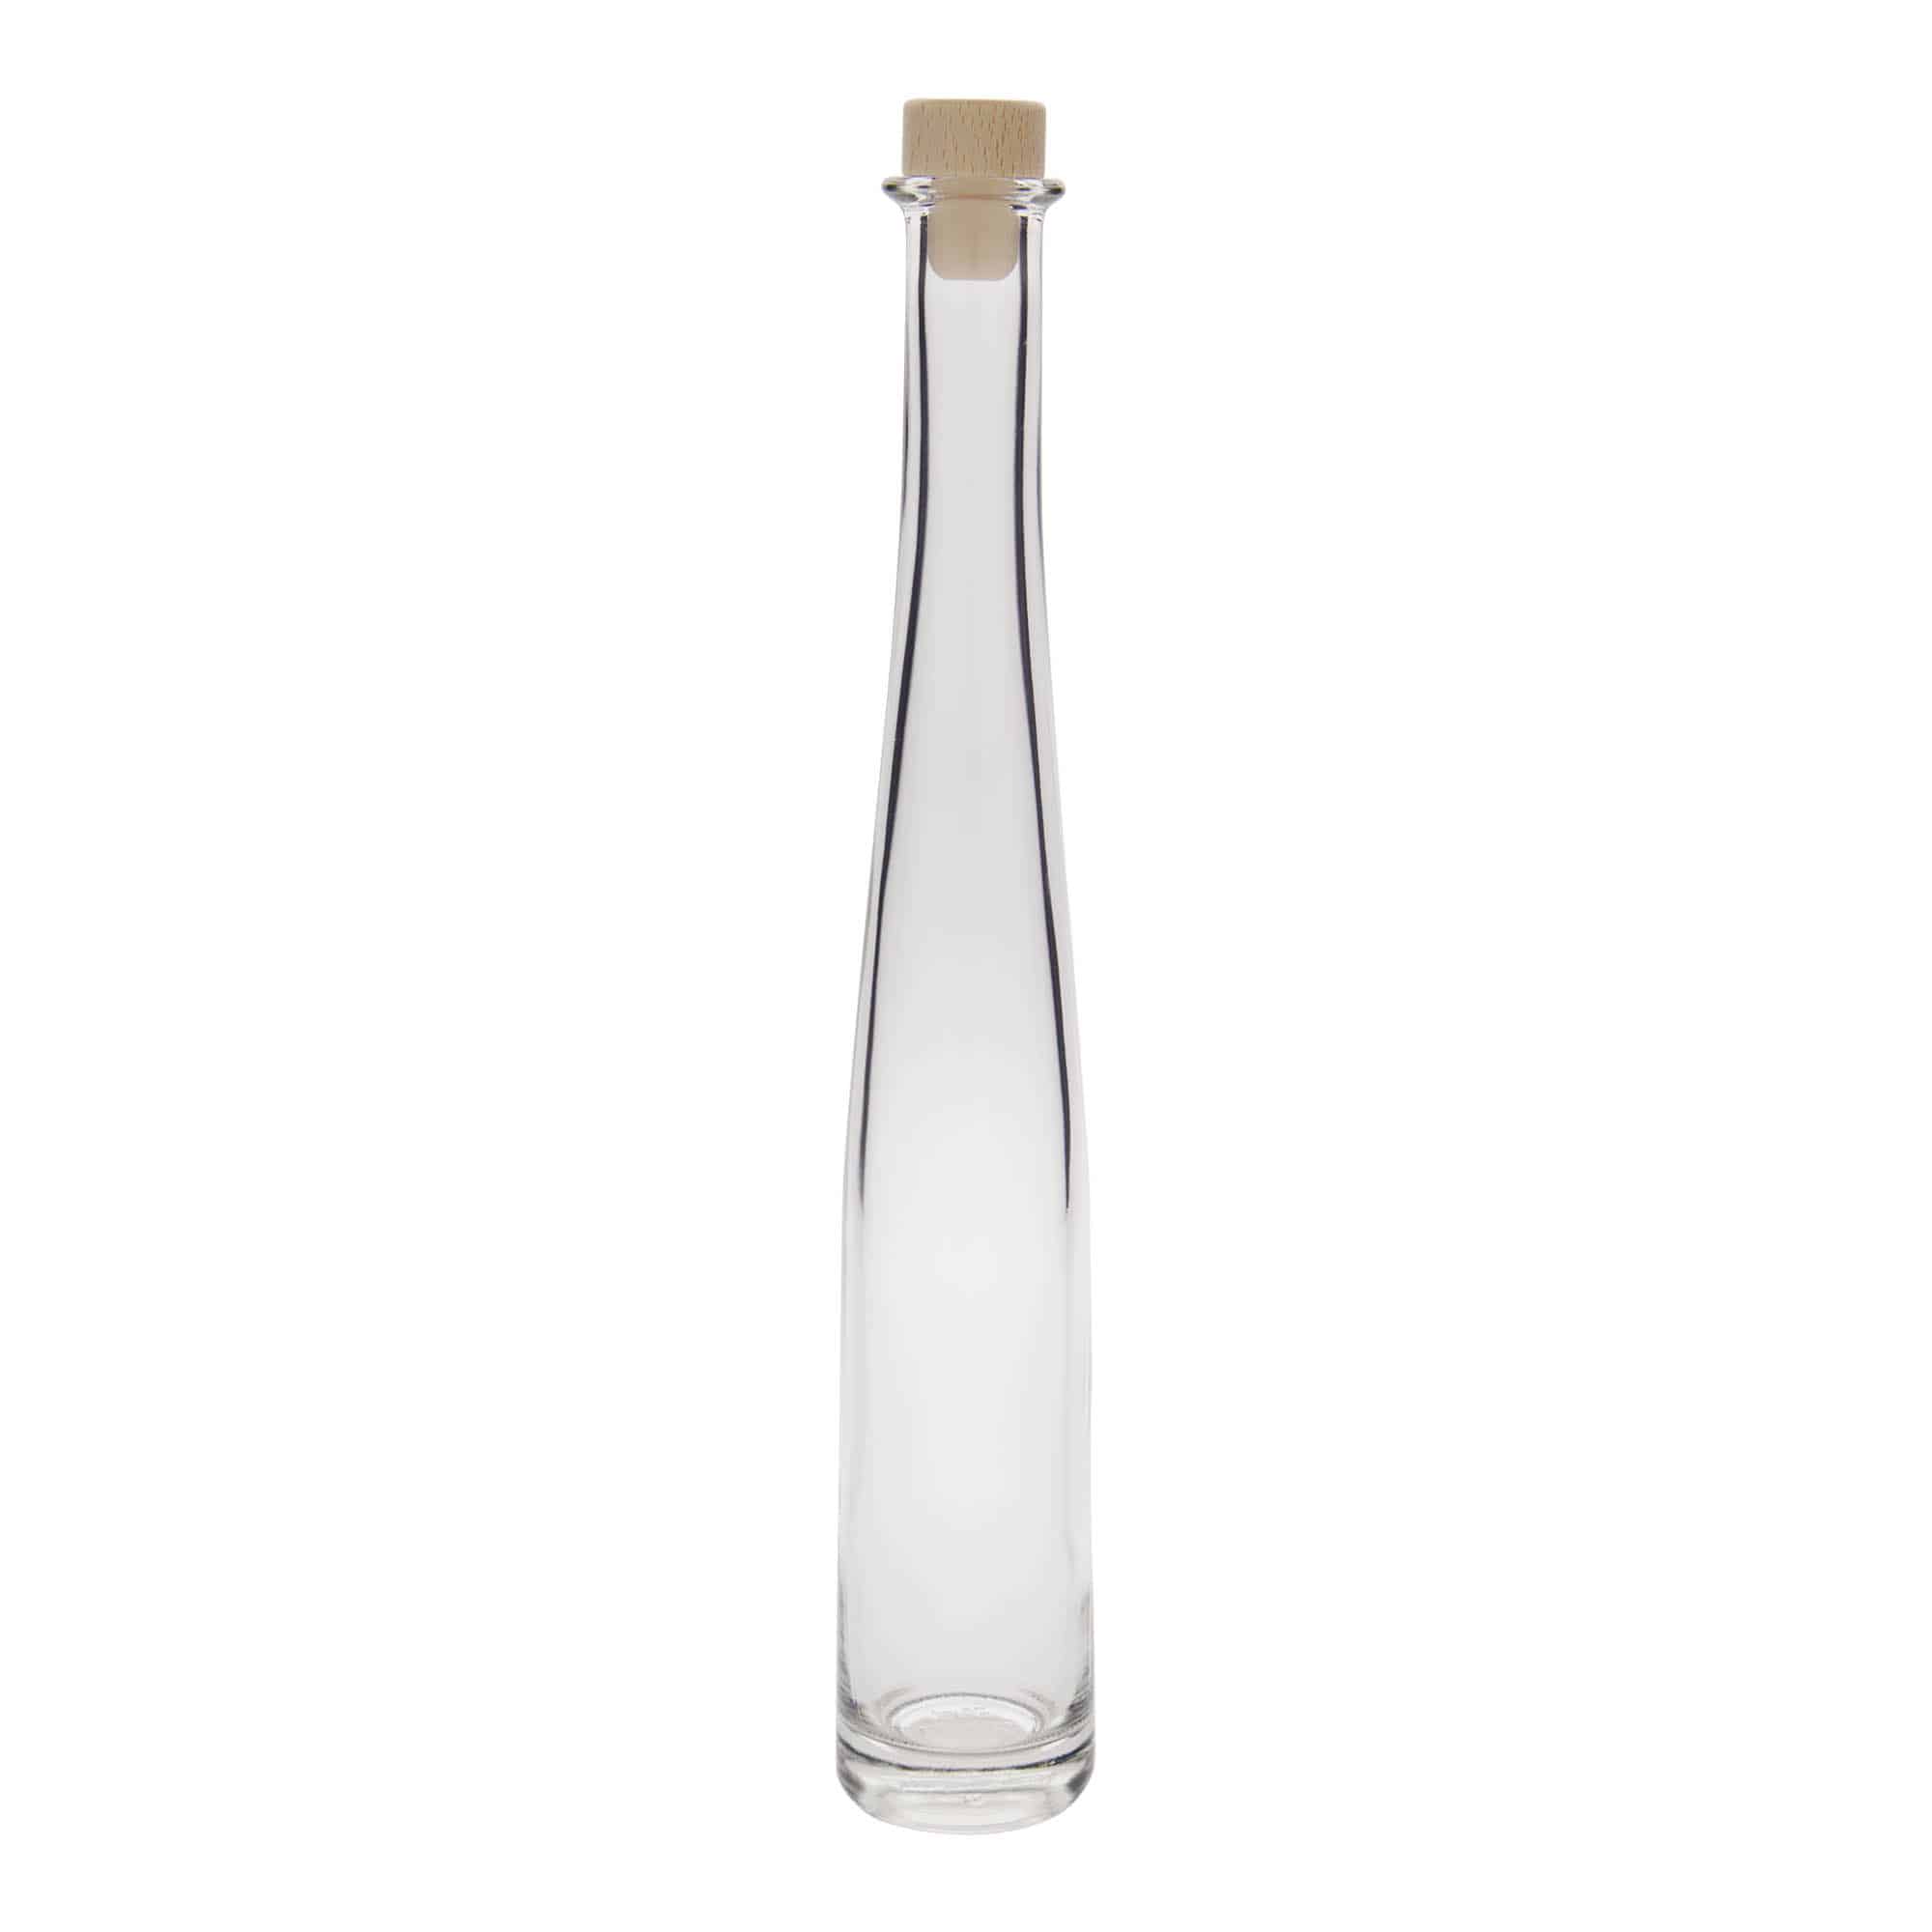 350 ml glass bottle 'Renana Futura', closure: cork